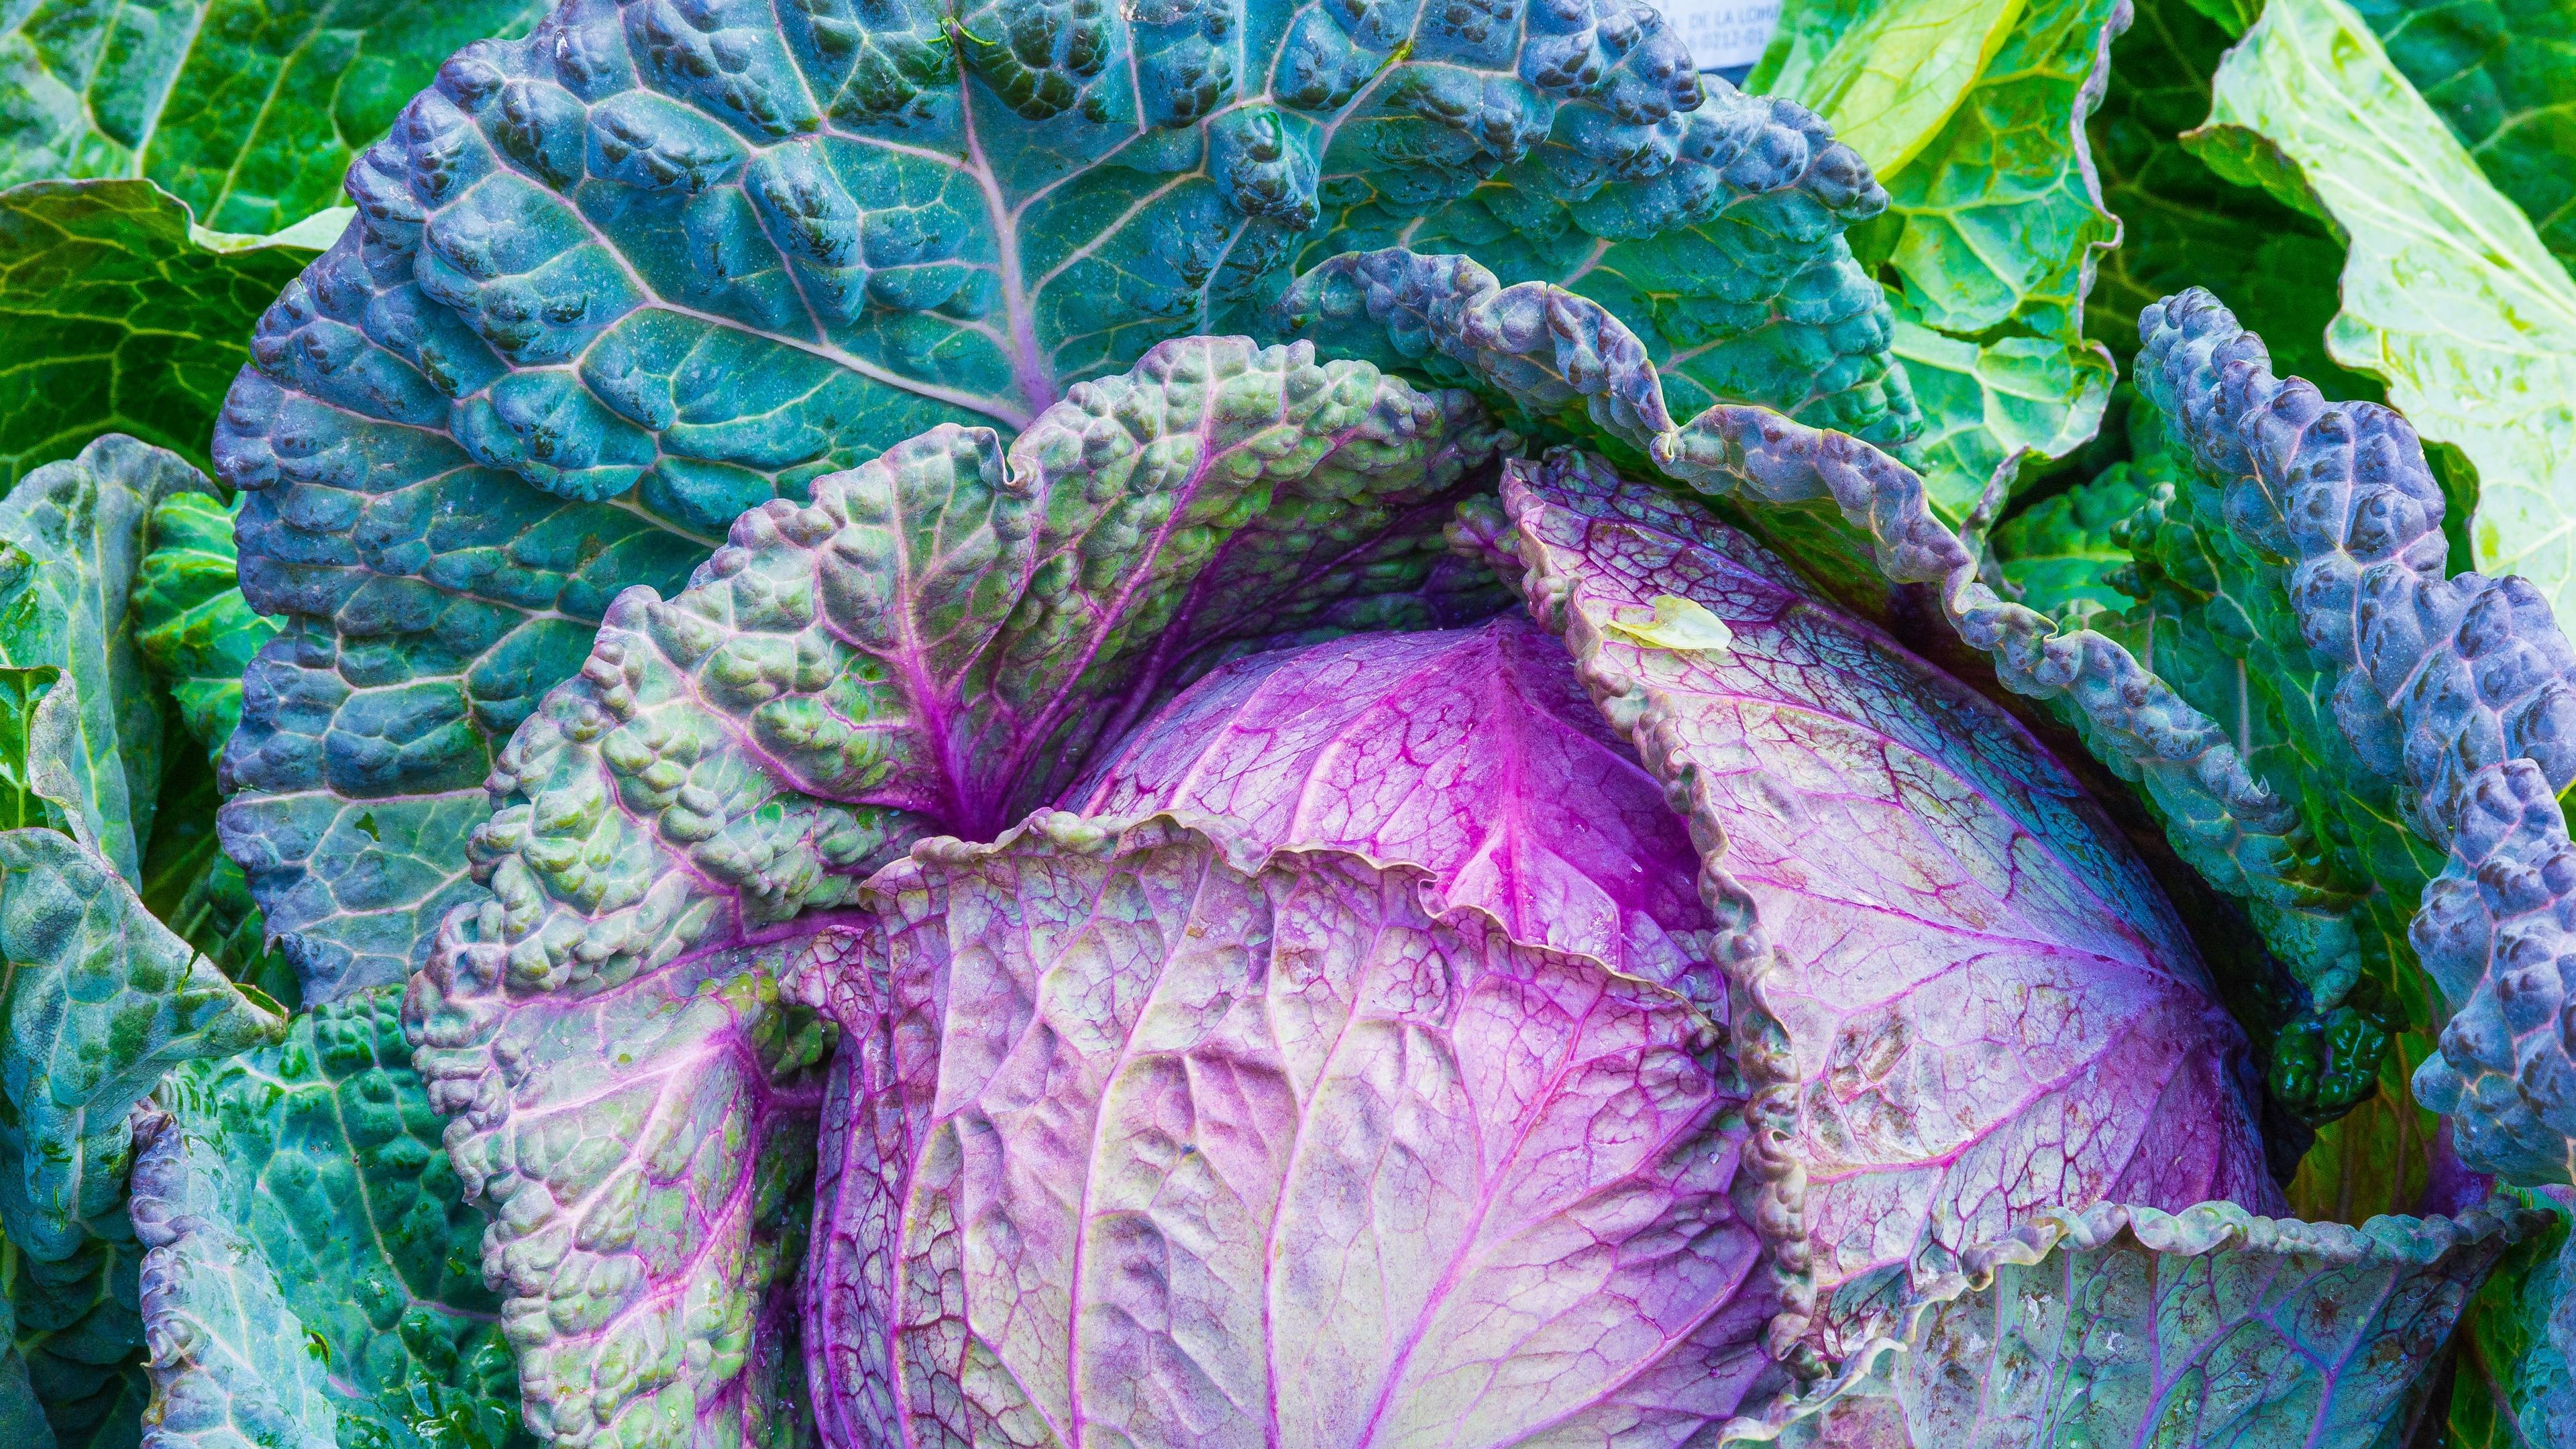 Download wallpaper 3840x2160 cabbage, vegetable, leaves 4k uhd 16:9